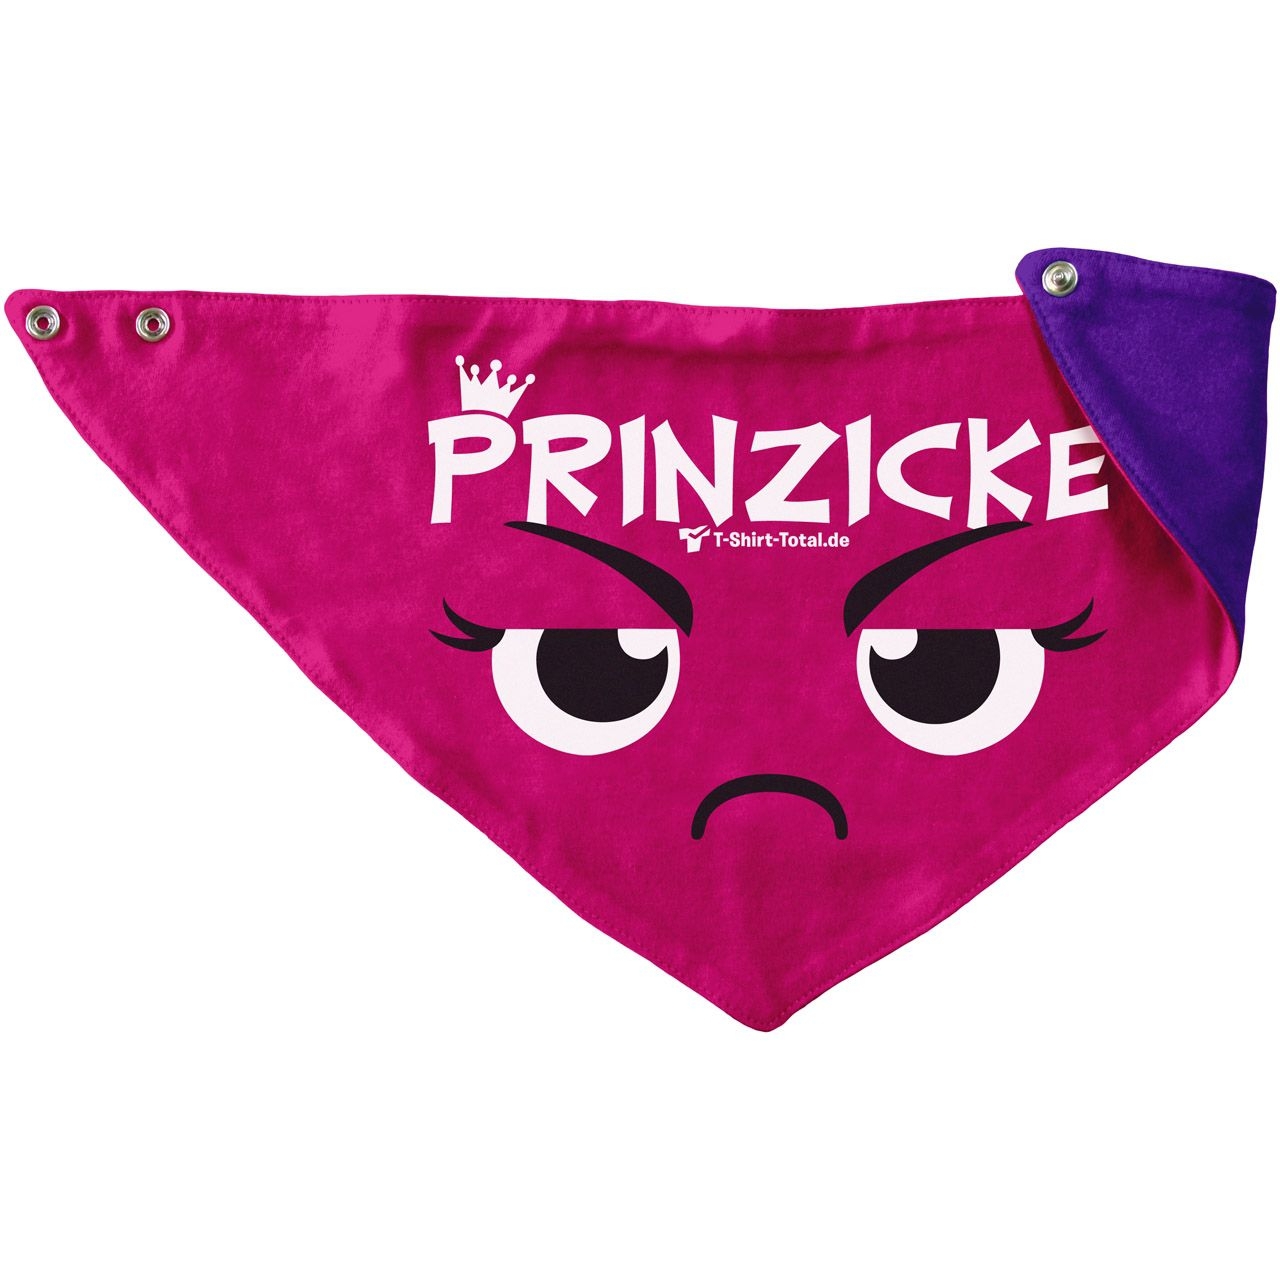 Prinzicke Kinder Dreieckstuch pink/lila